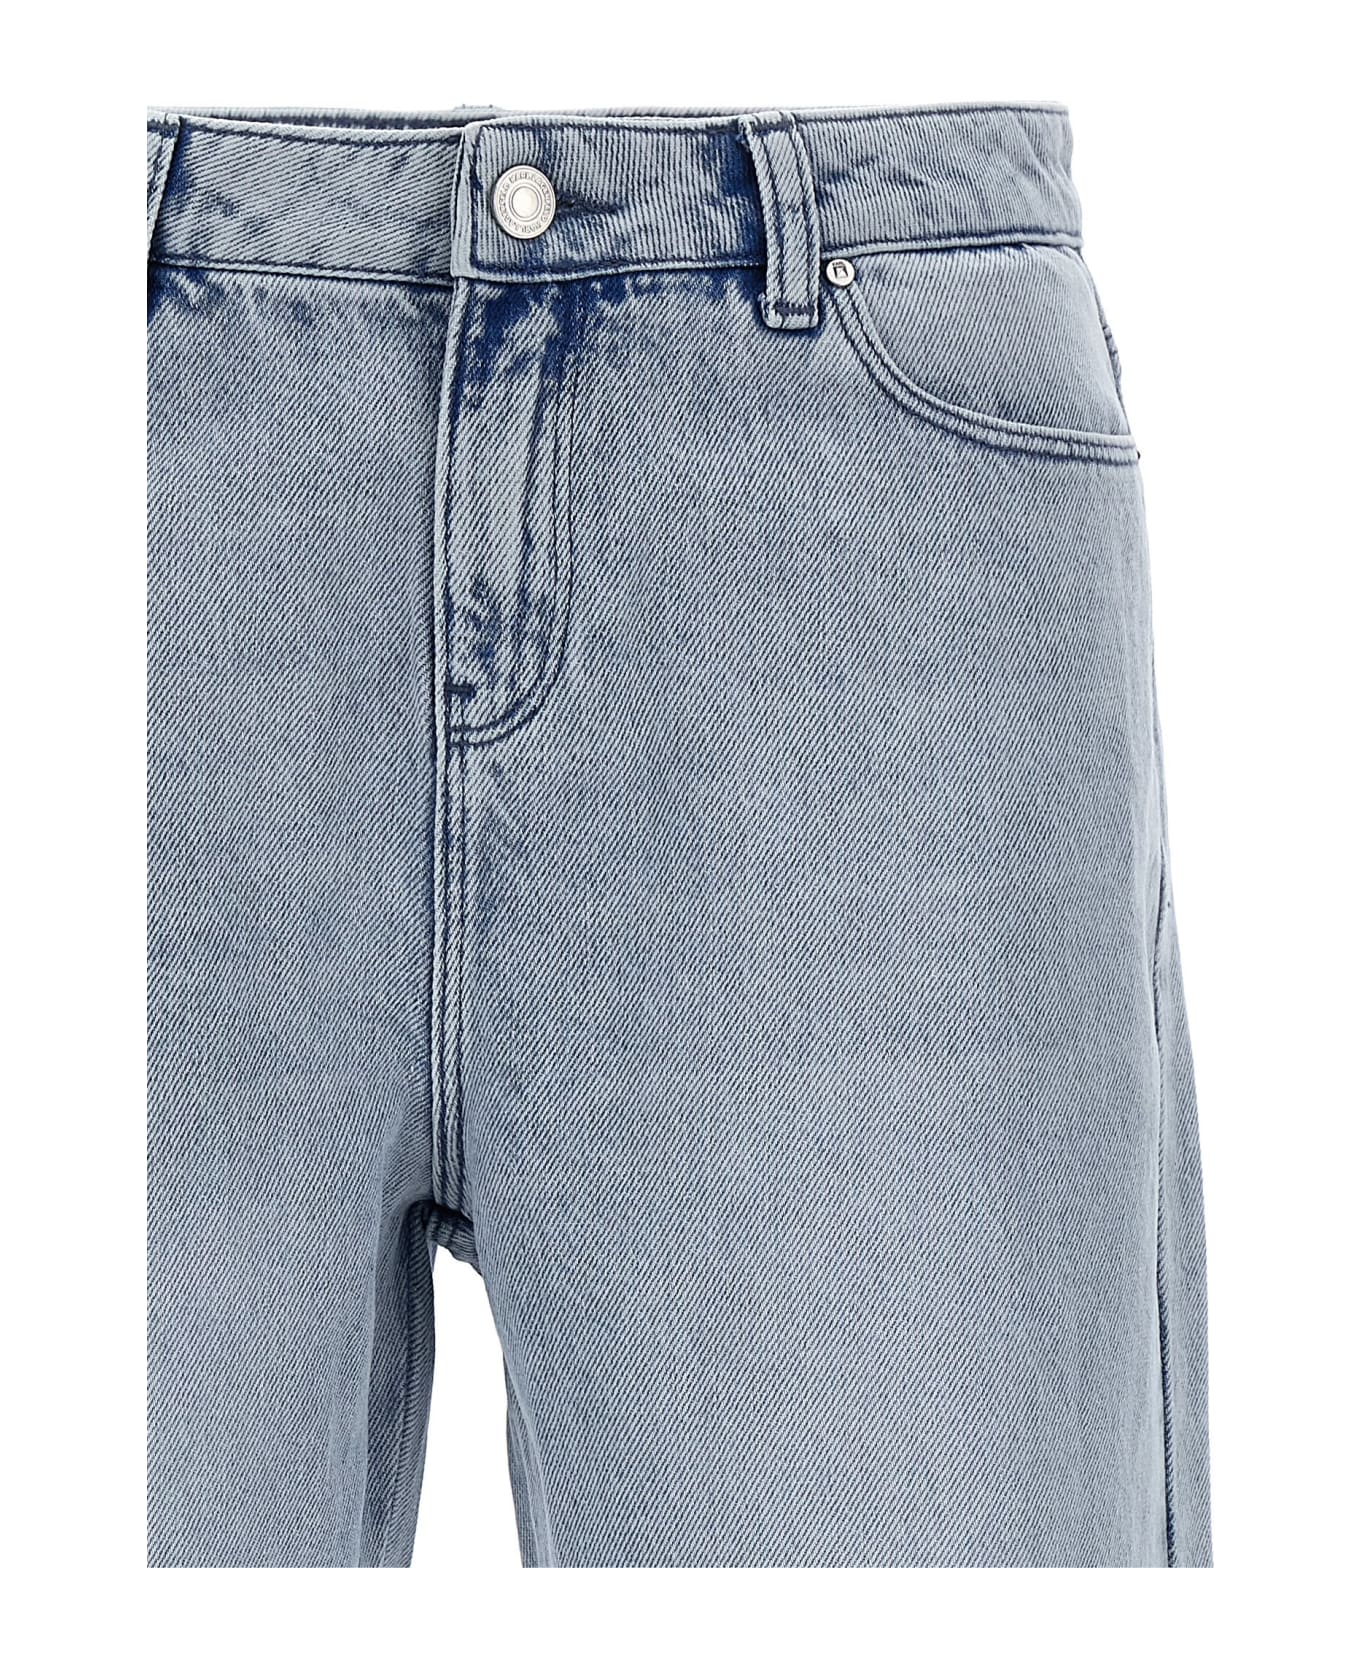 Karl Lagerfeld Rhinestone Fringed Jeans - Light Blue デニム